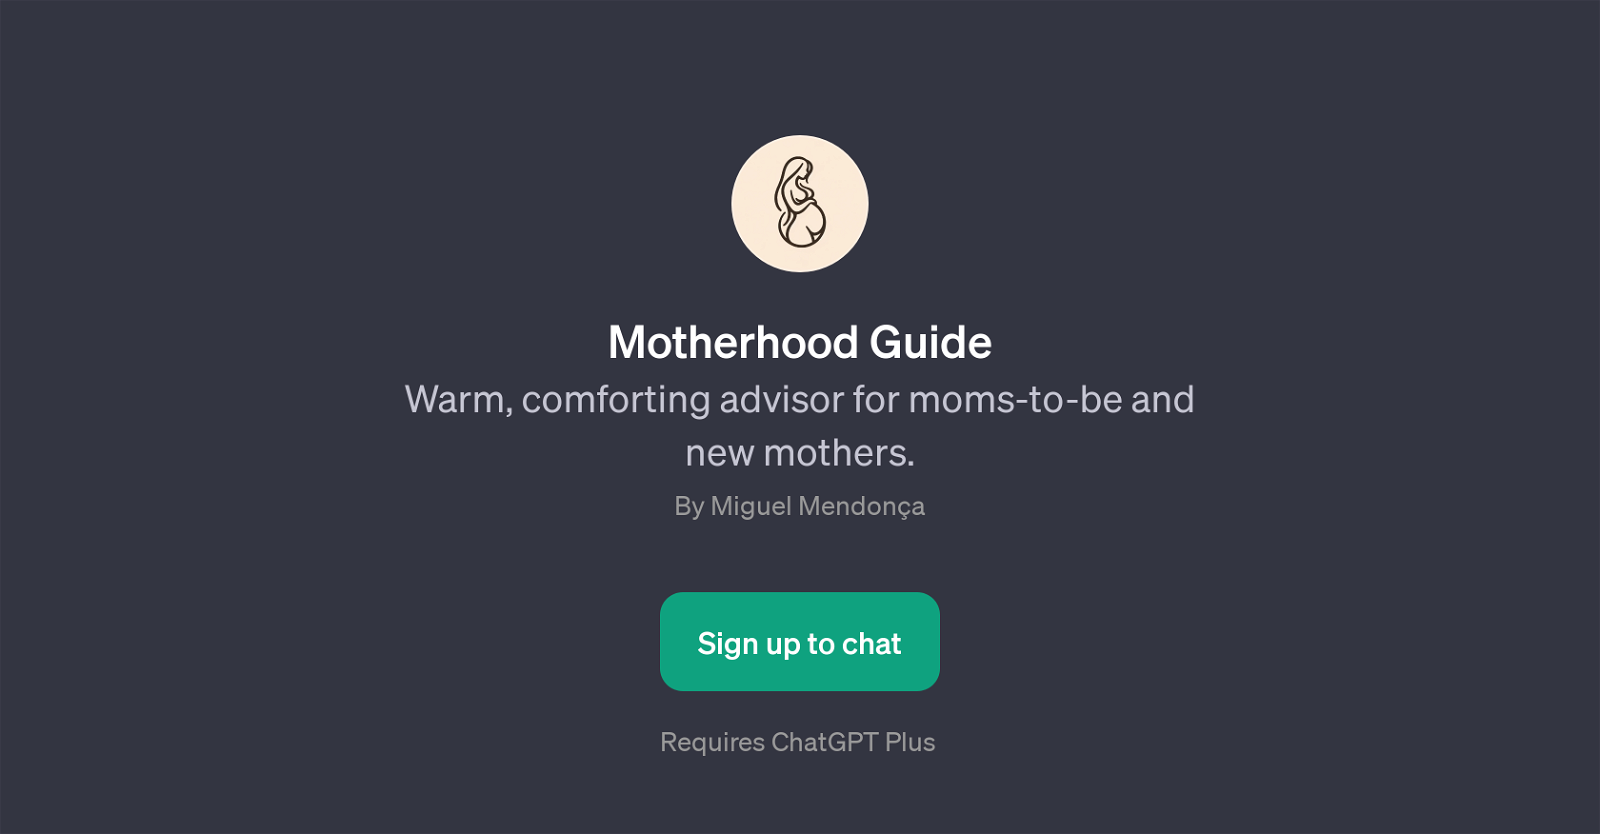 Motherhood Guide website